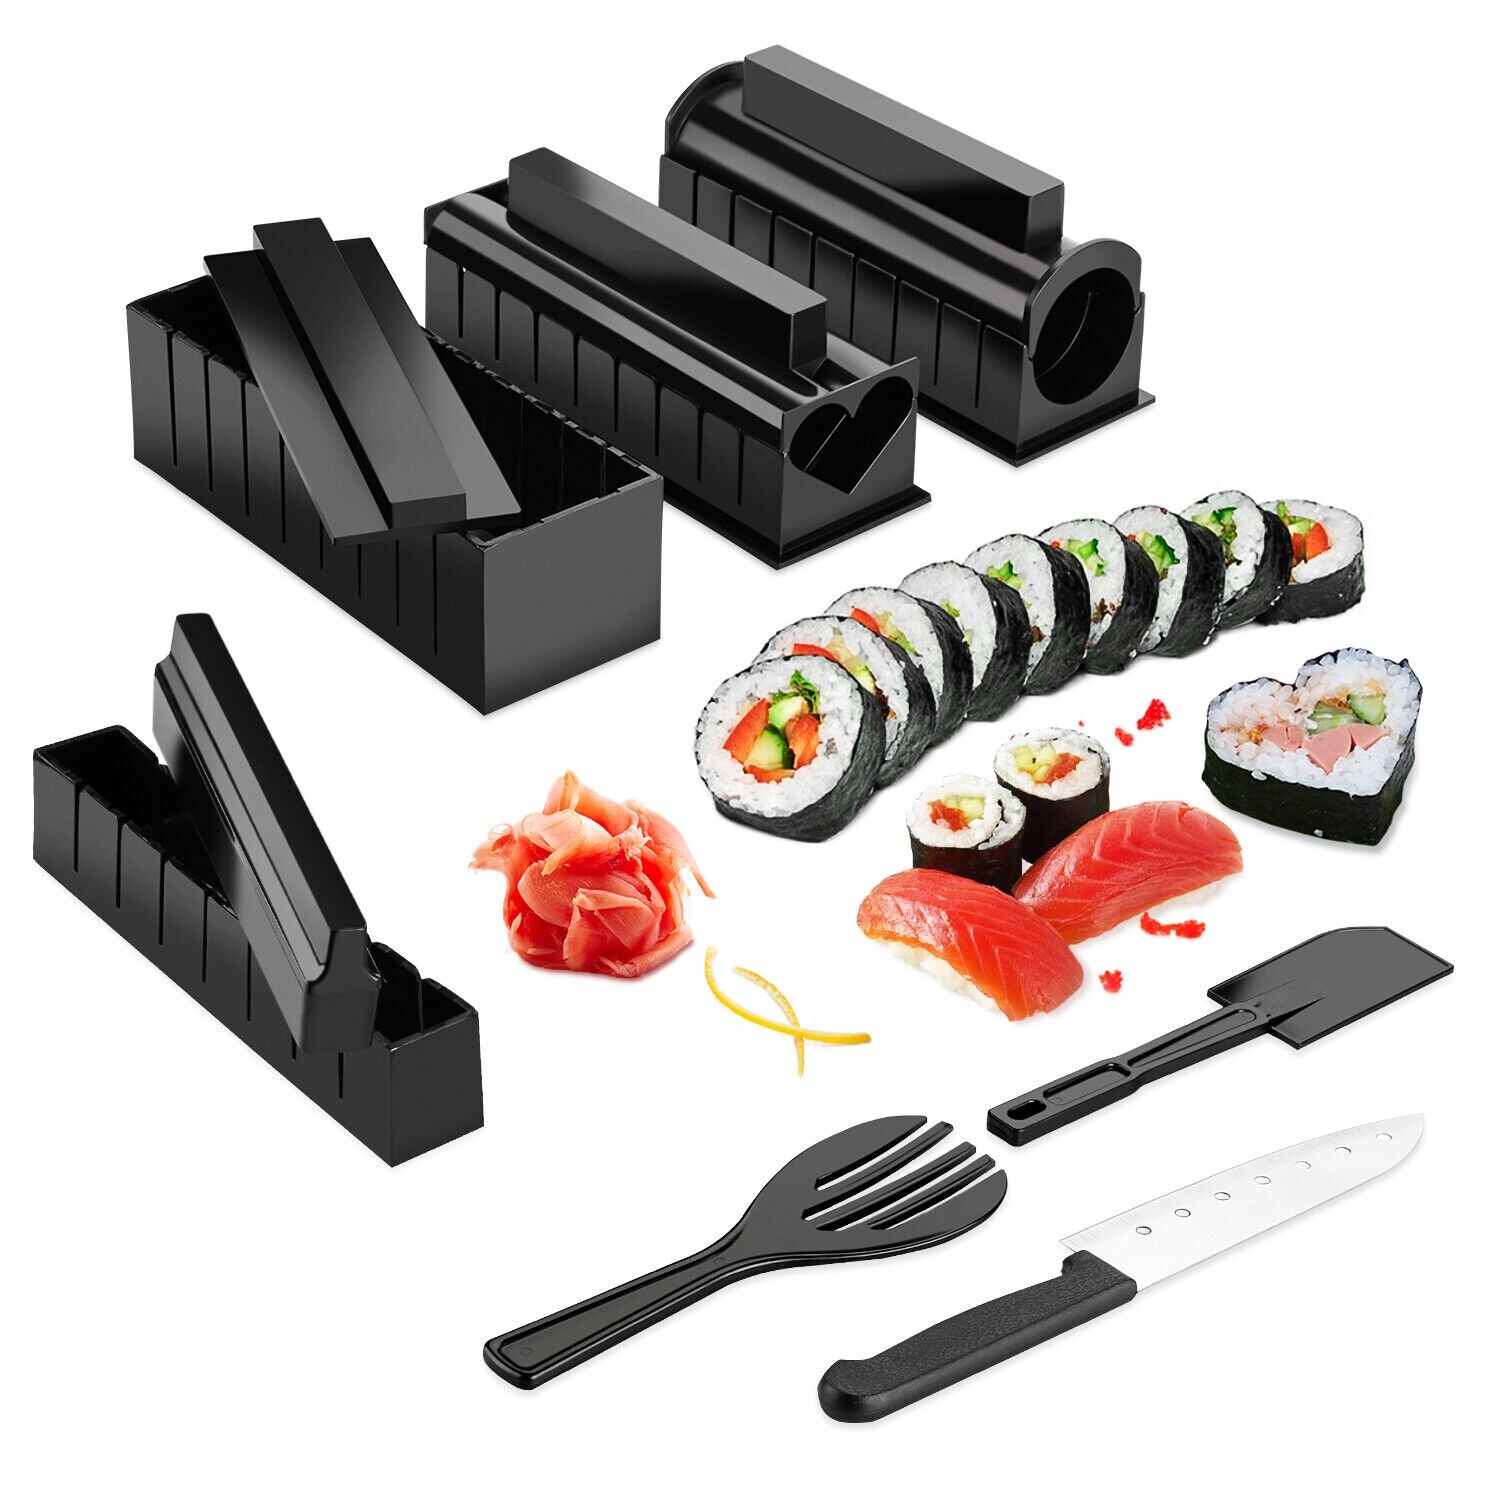 Agptek 11Pcs Sushi Making Kit ABS Plastic Sushi Rolls with Premium